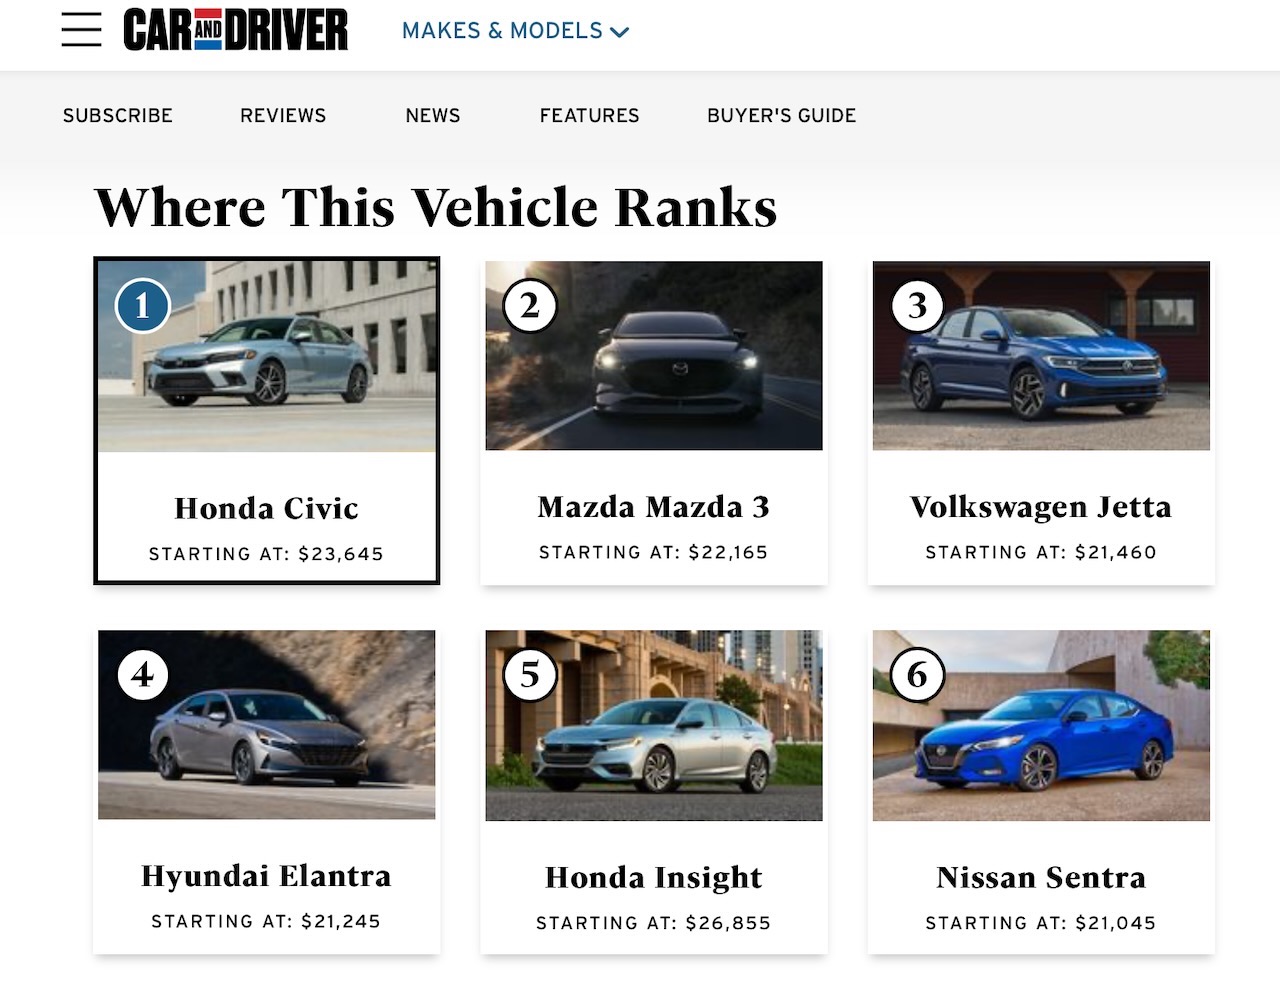 Car and Driver ranks Honda Civic #1